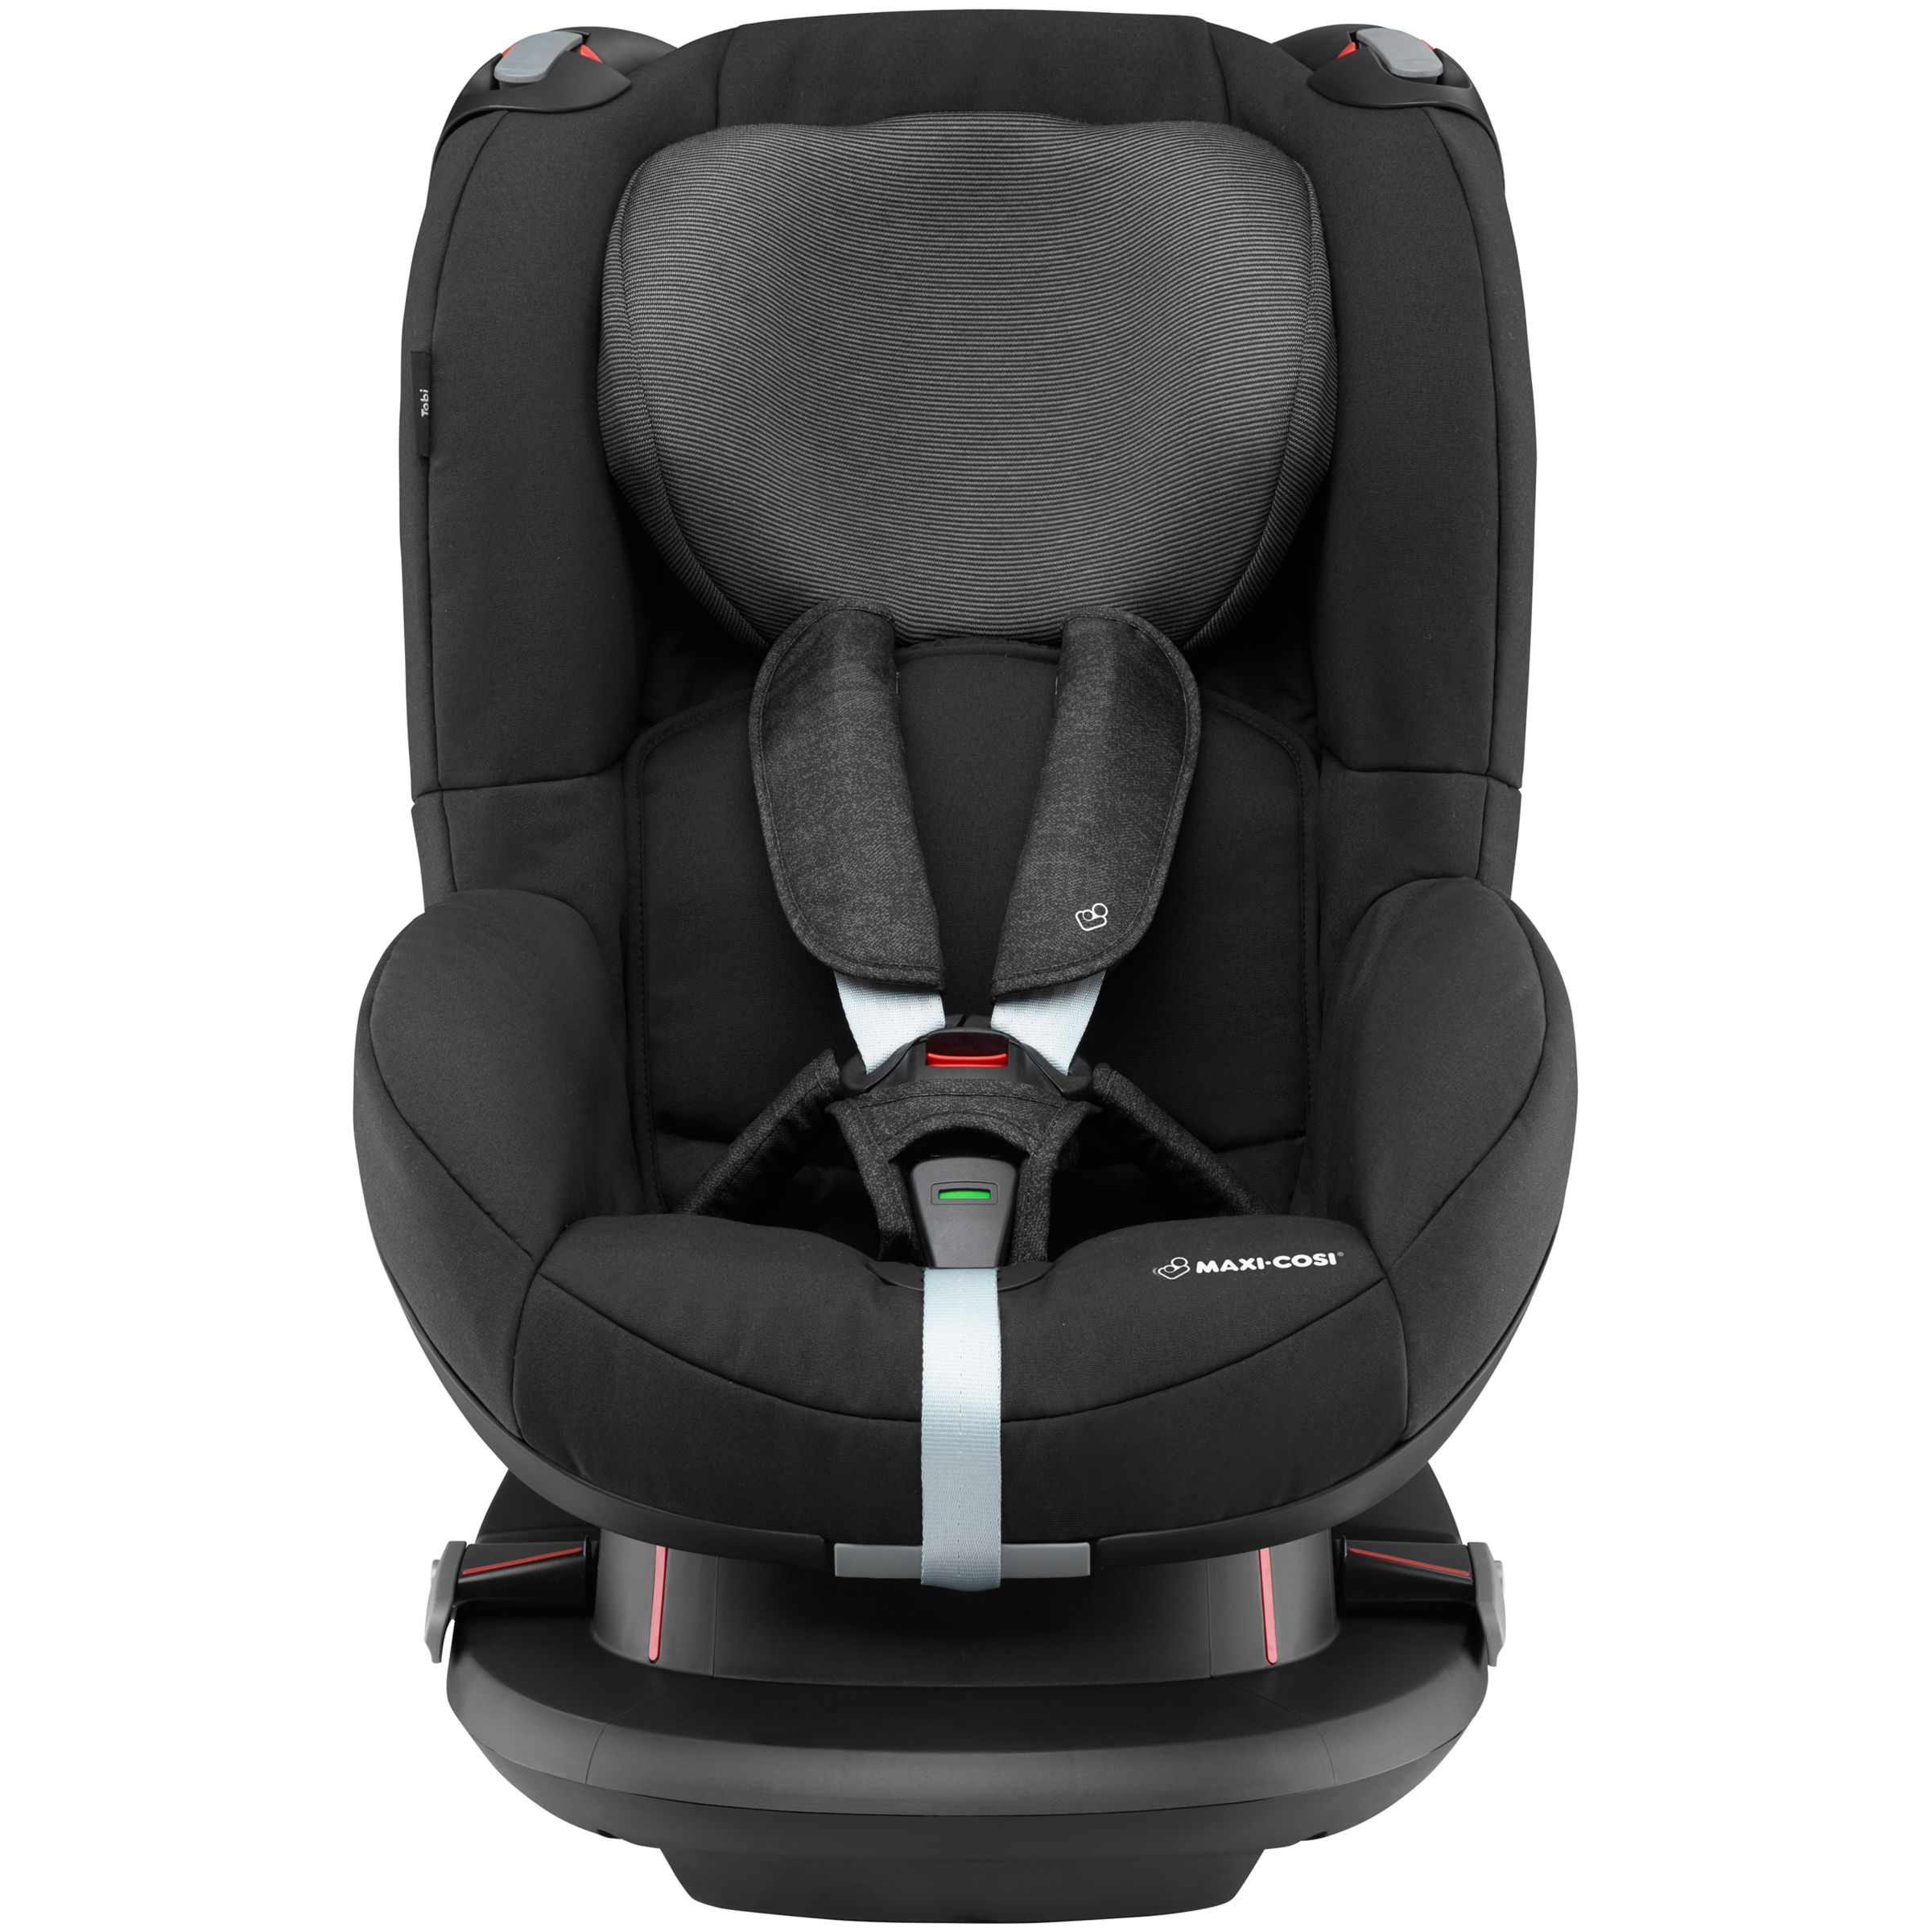 Meetbaar browser dorst Maxi-Cosi Tobi Group 1 Car Seat, Nomad Black